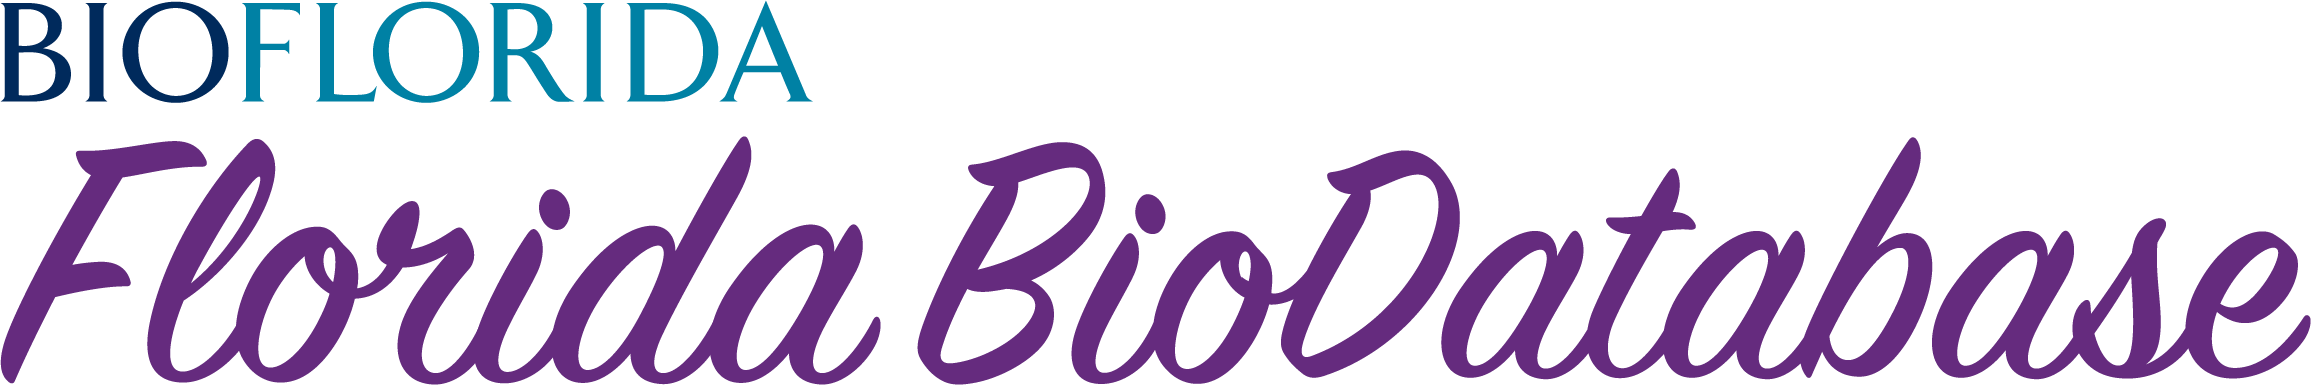 BioFlorida